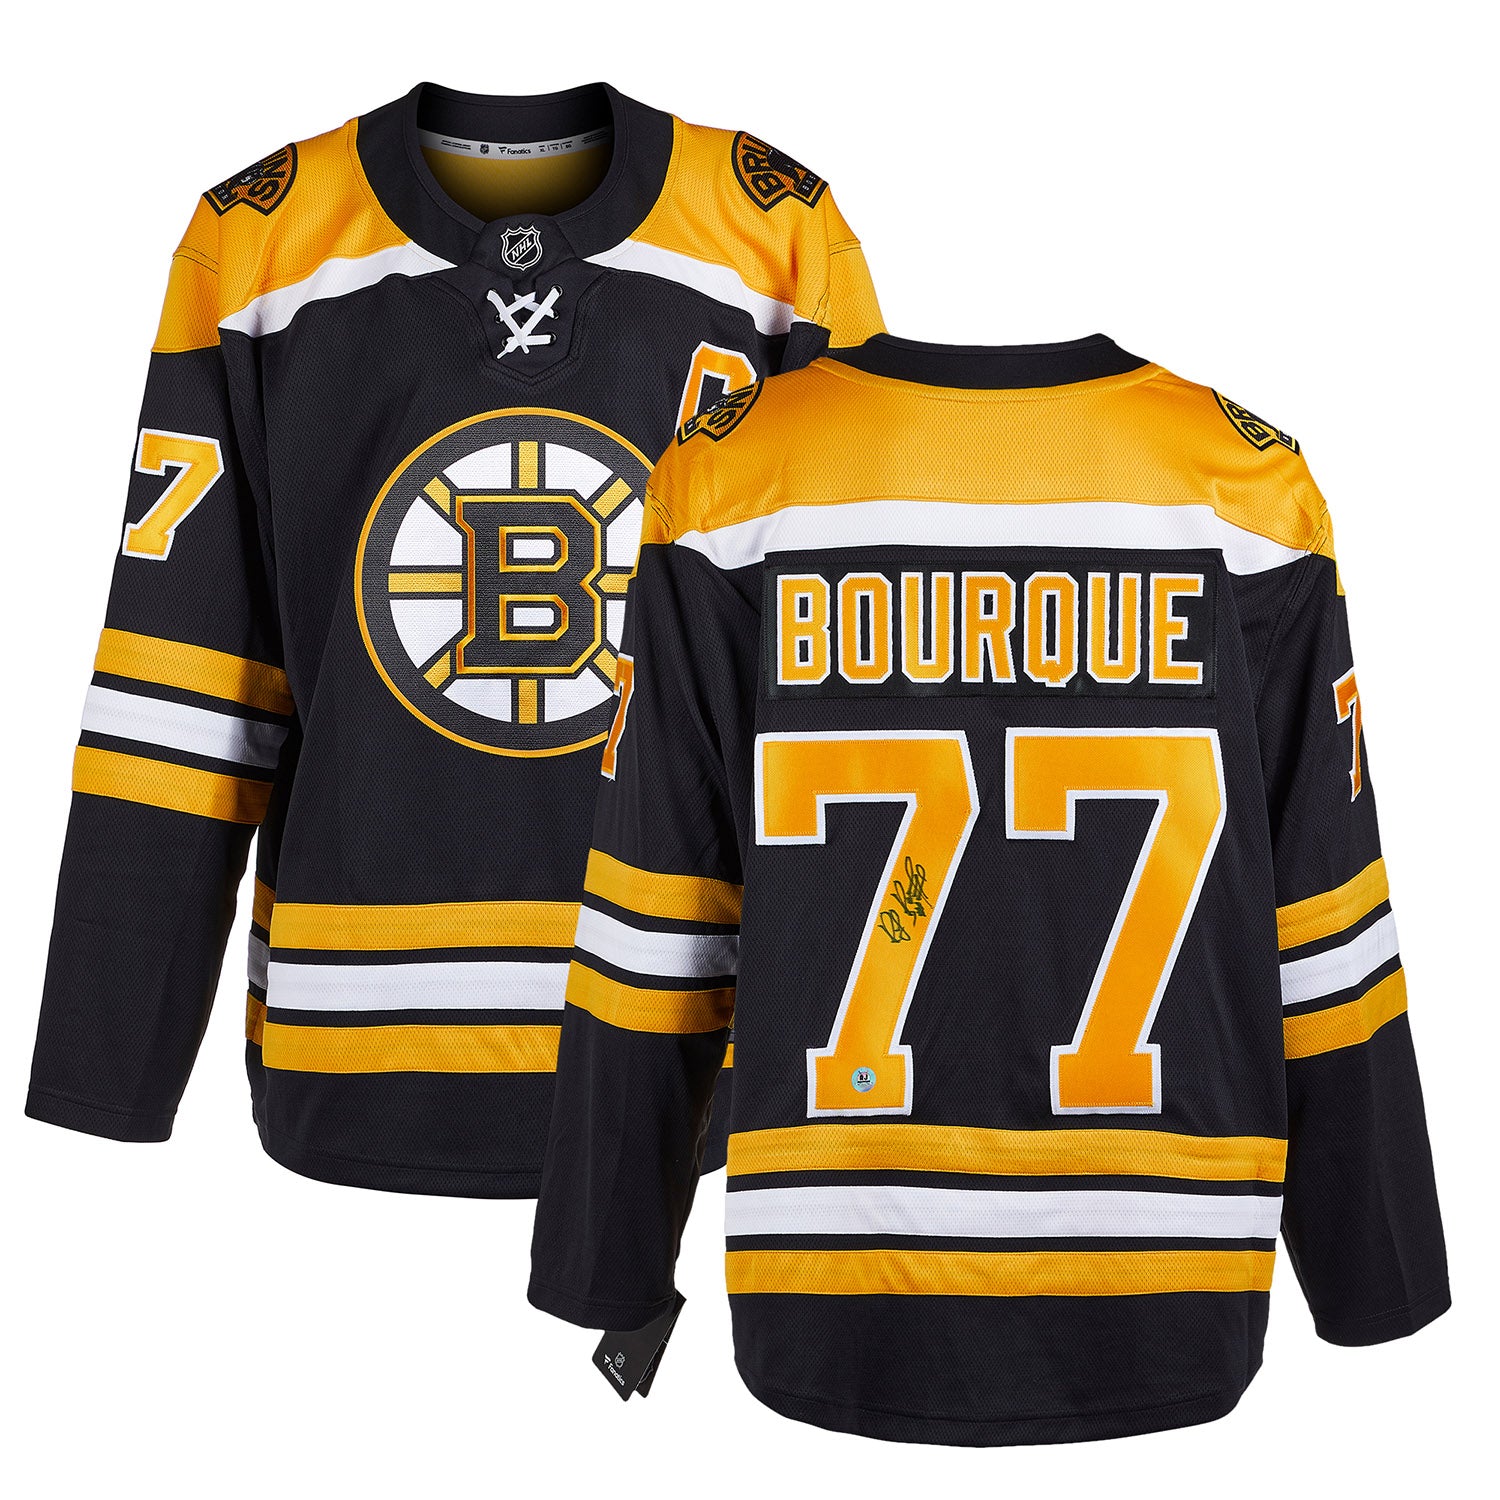 AJ Sports  Ray Bourque Boston Bruins Autographed Fanatics Jersey